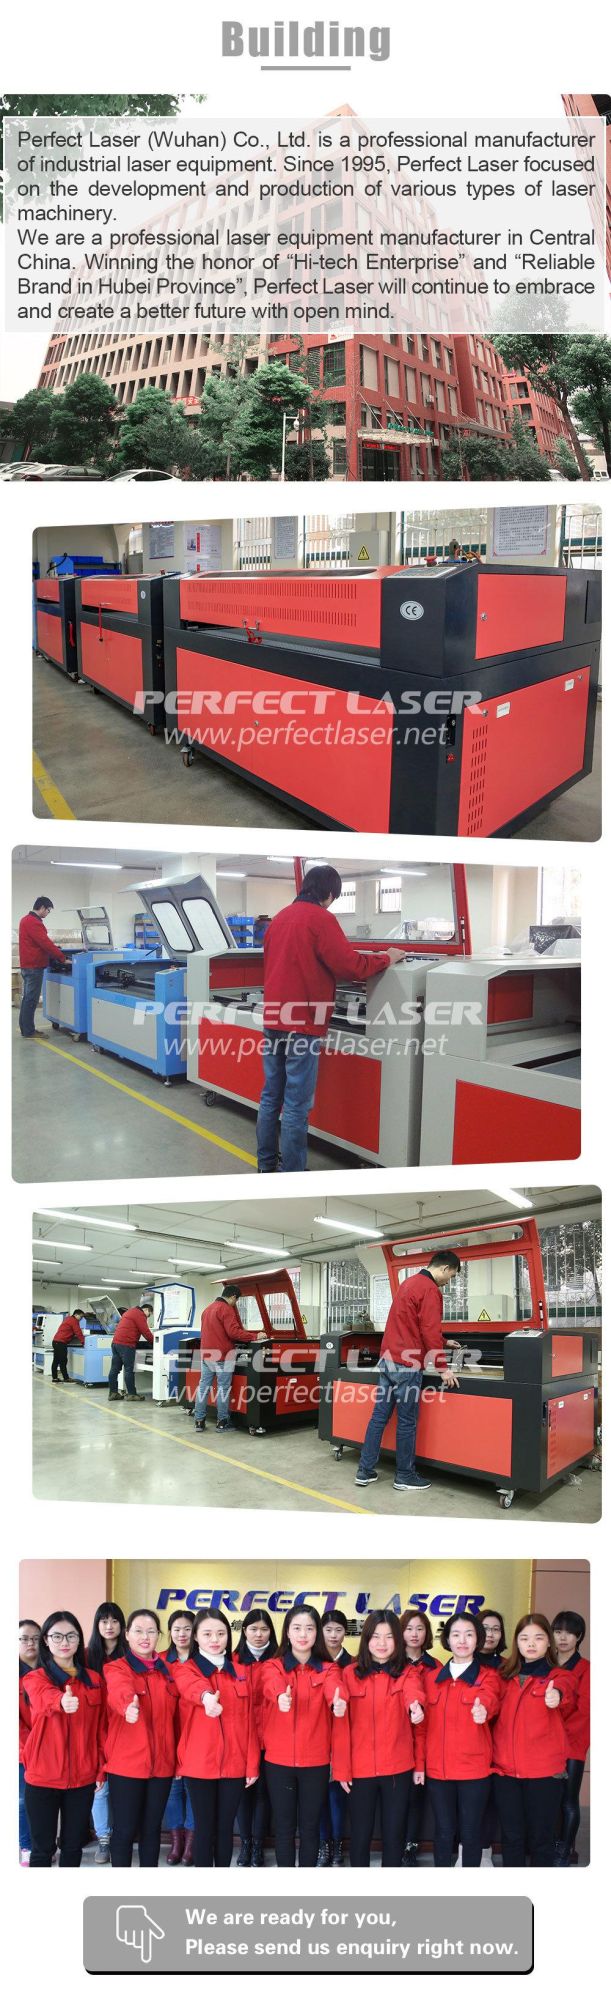 China High Quality Fabric MDF Wood Leather Laser Engraving Machine 100W 150W 300W